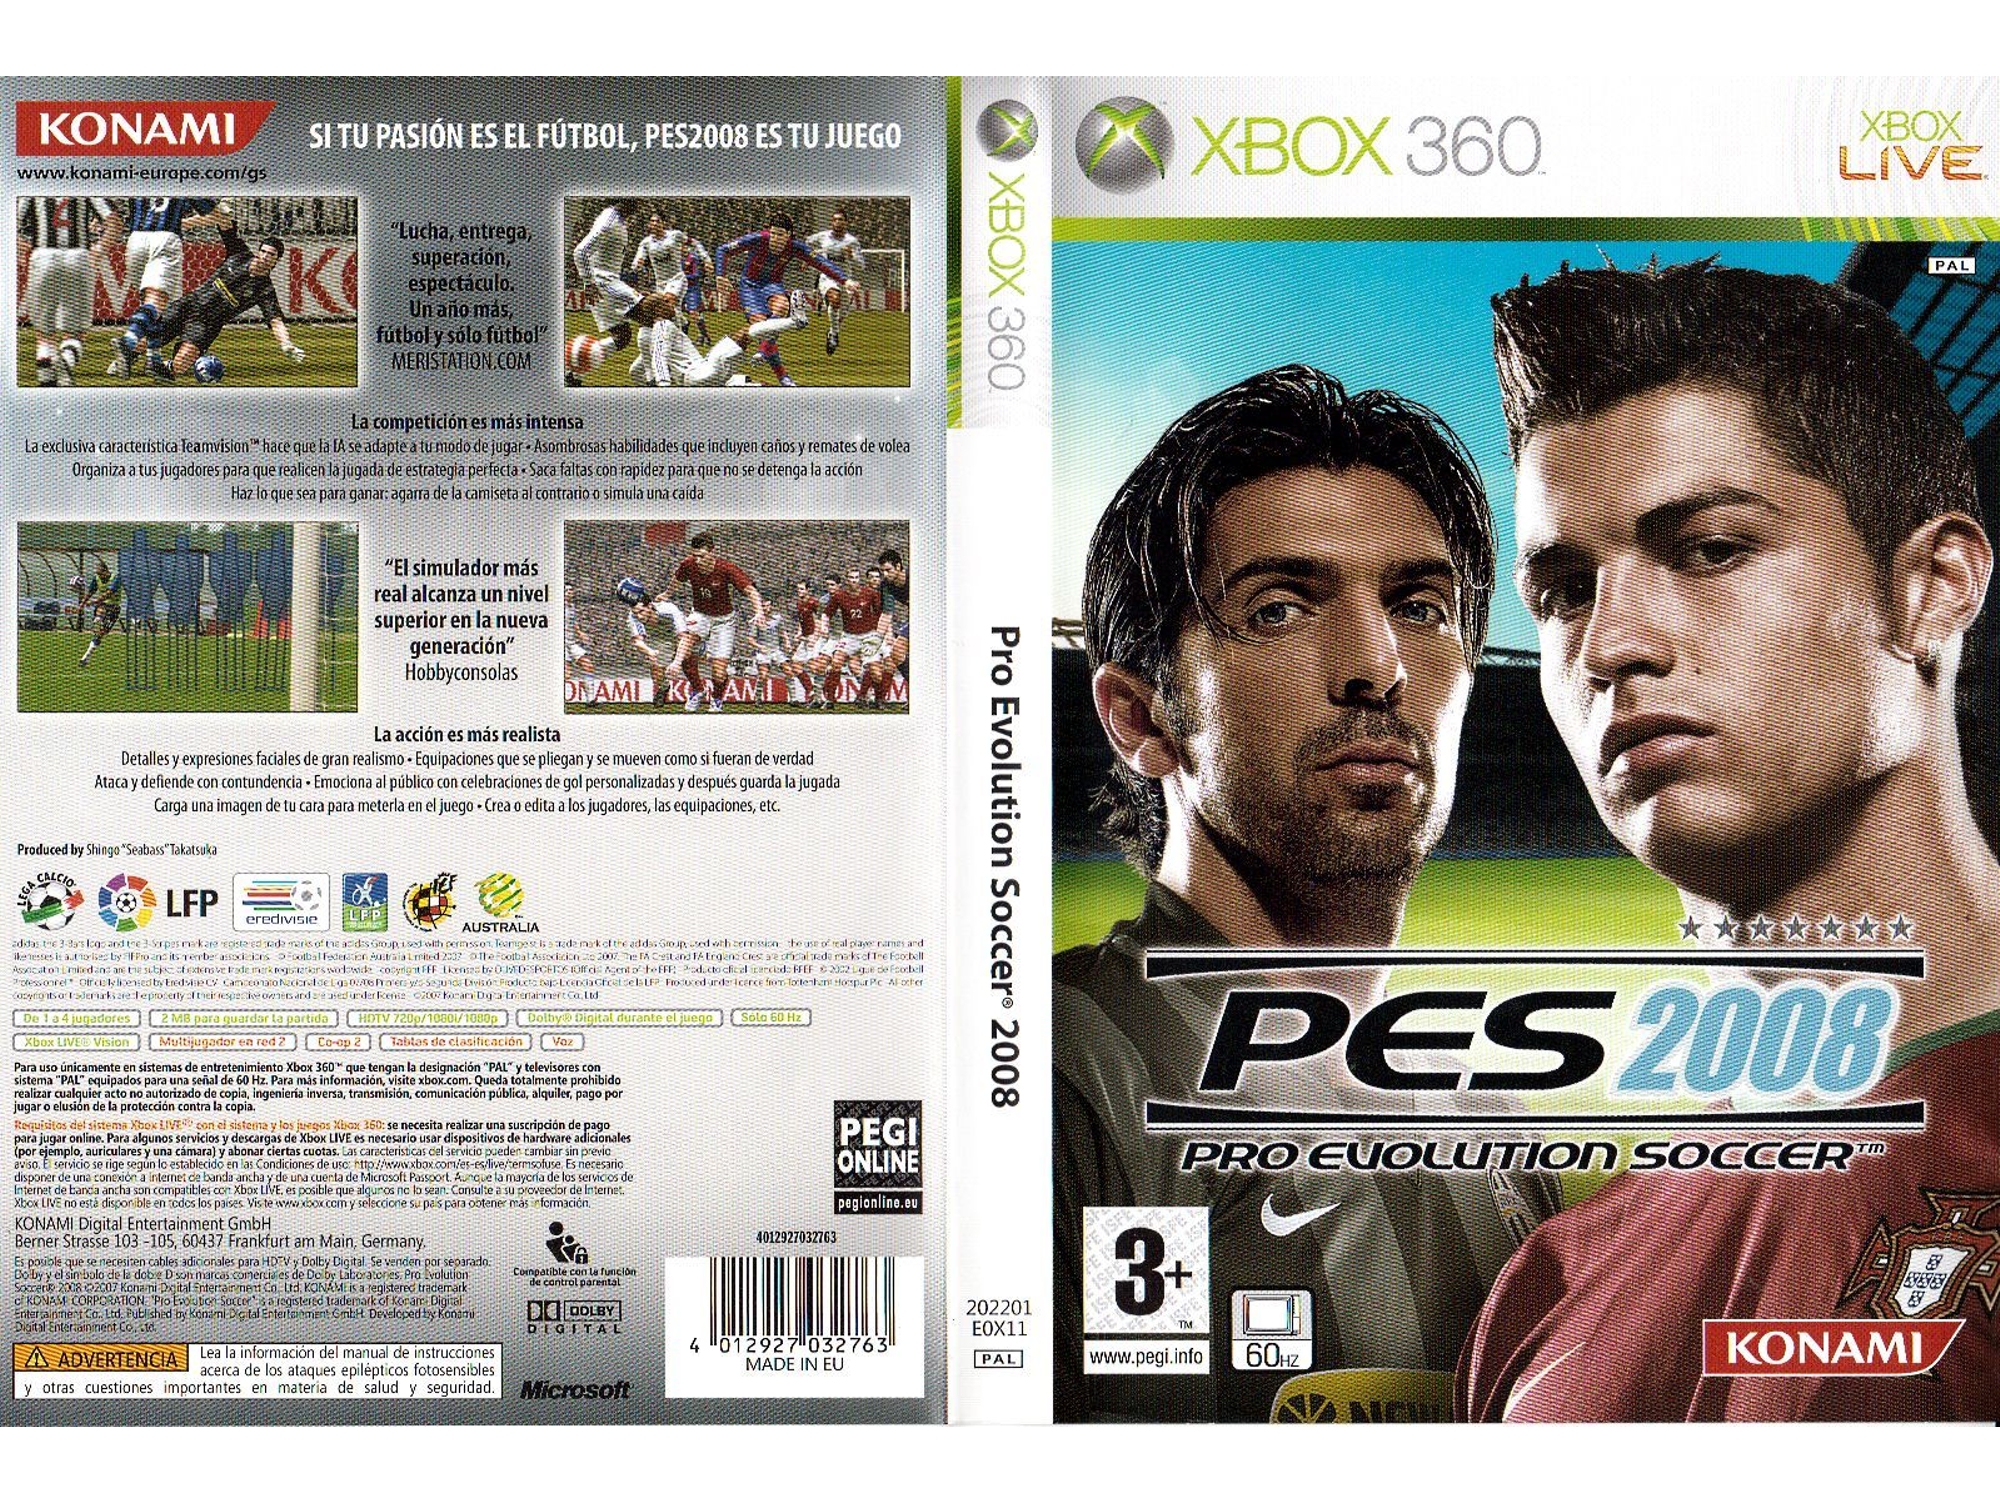 Juego Xbox 360 PES 2008 Pro Evolution Soccer 